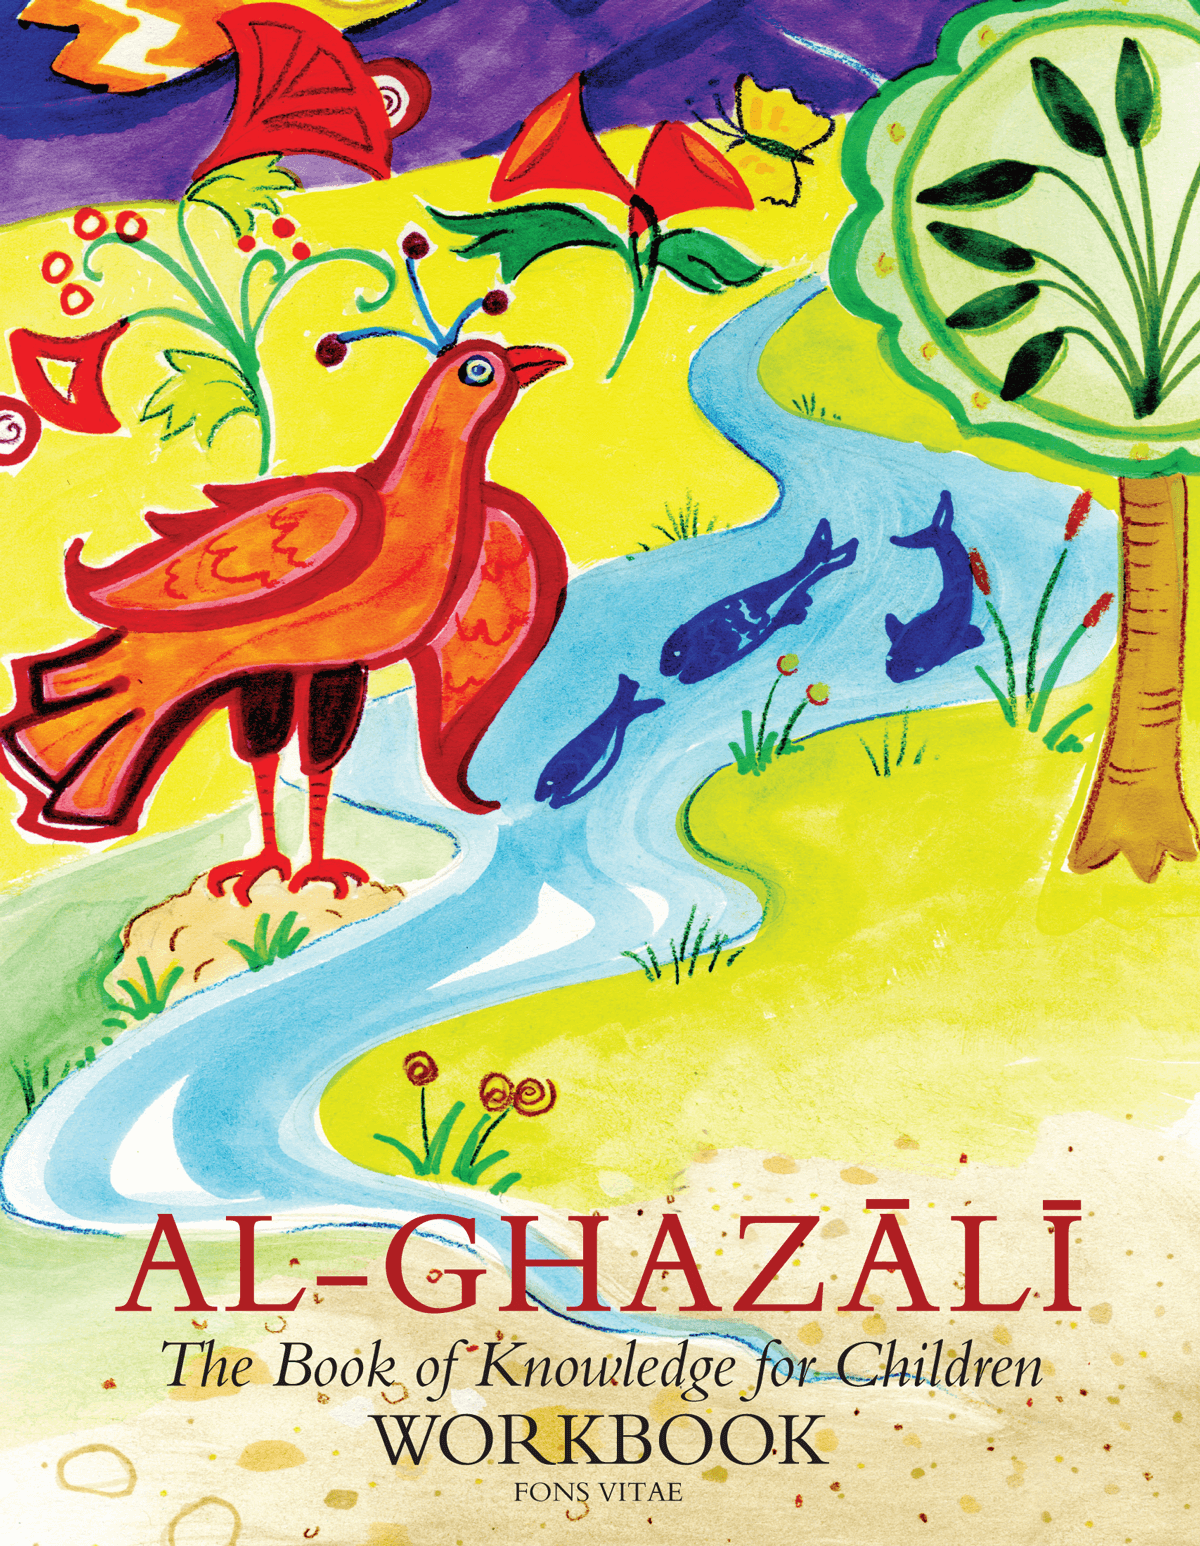 Al ghazali books pdf 2016